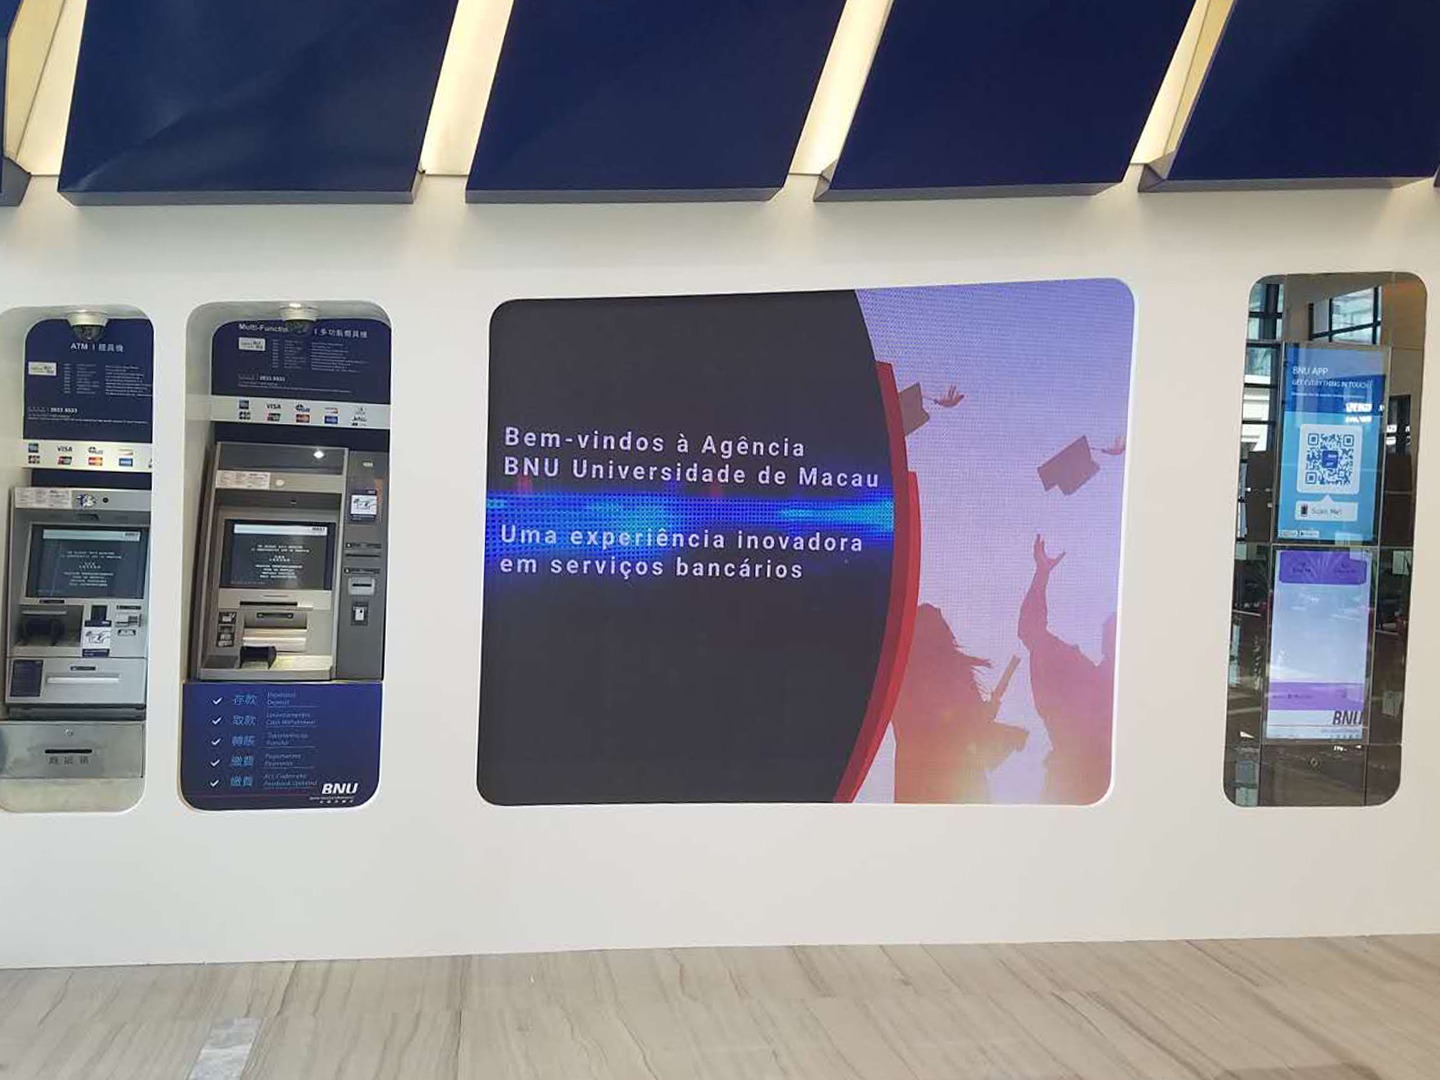 Светодиодная видеостена itc P2.5 установлена в Banco Nacional Ultramarino (BNU), Макао